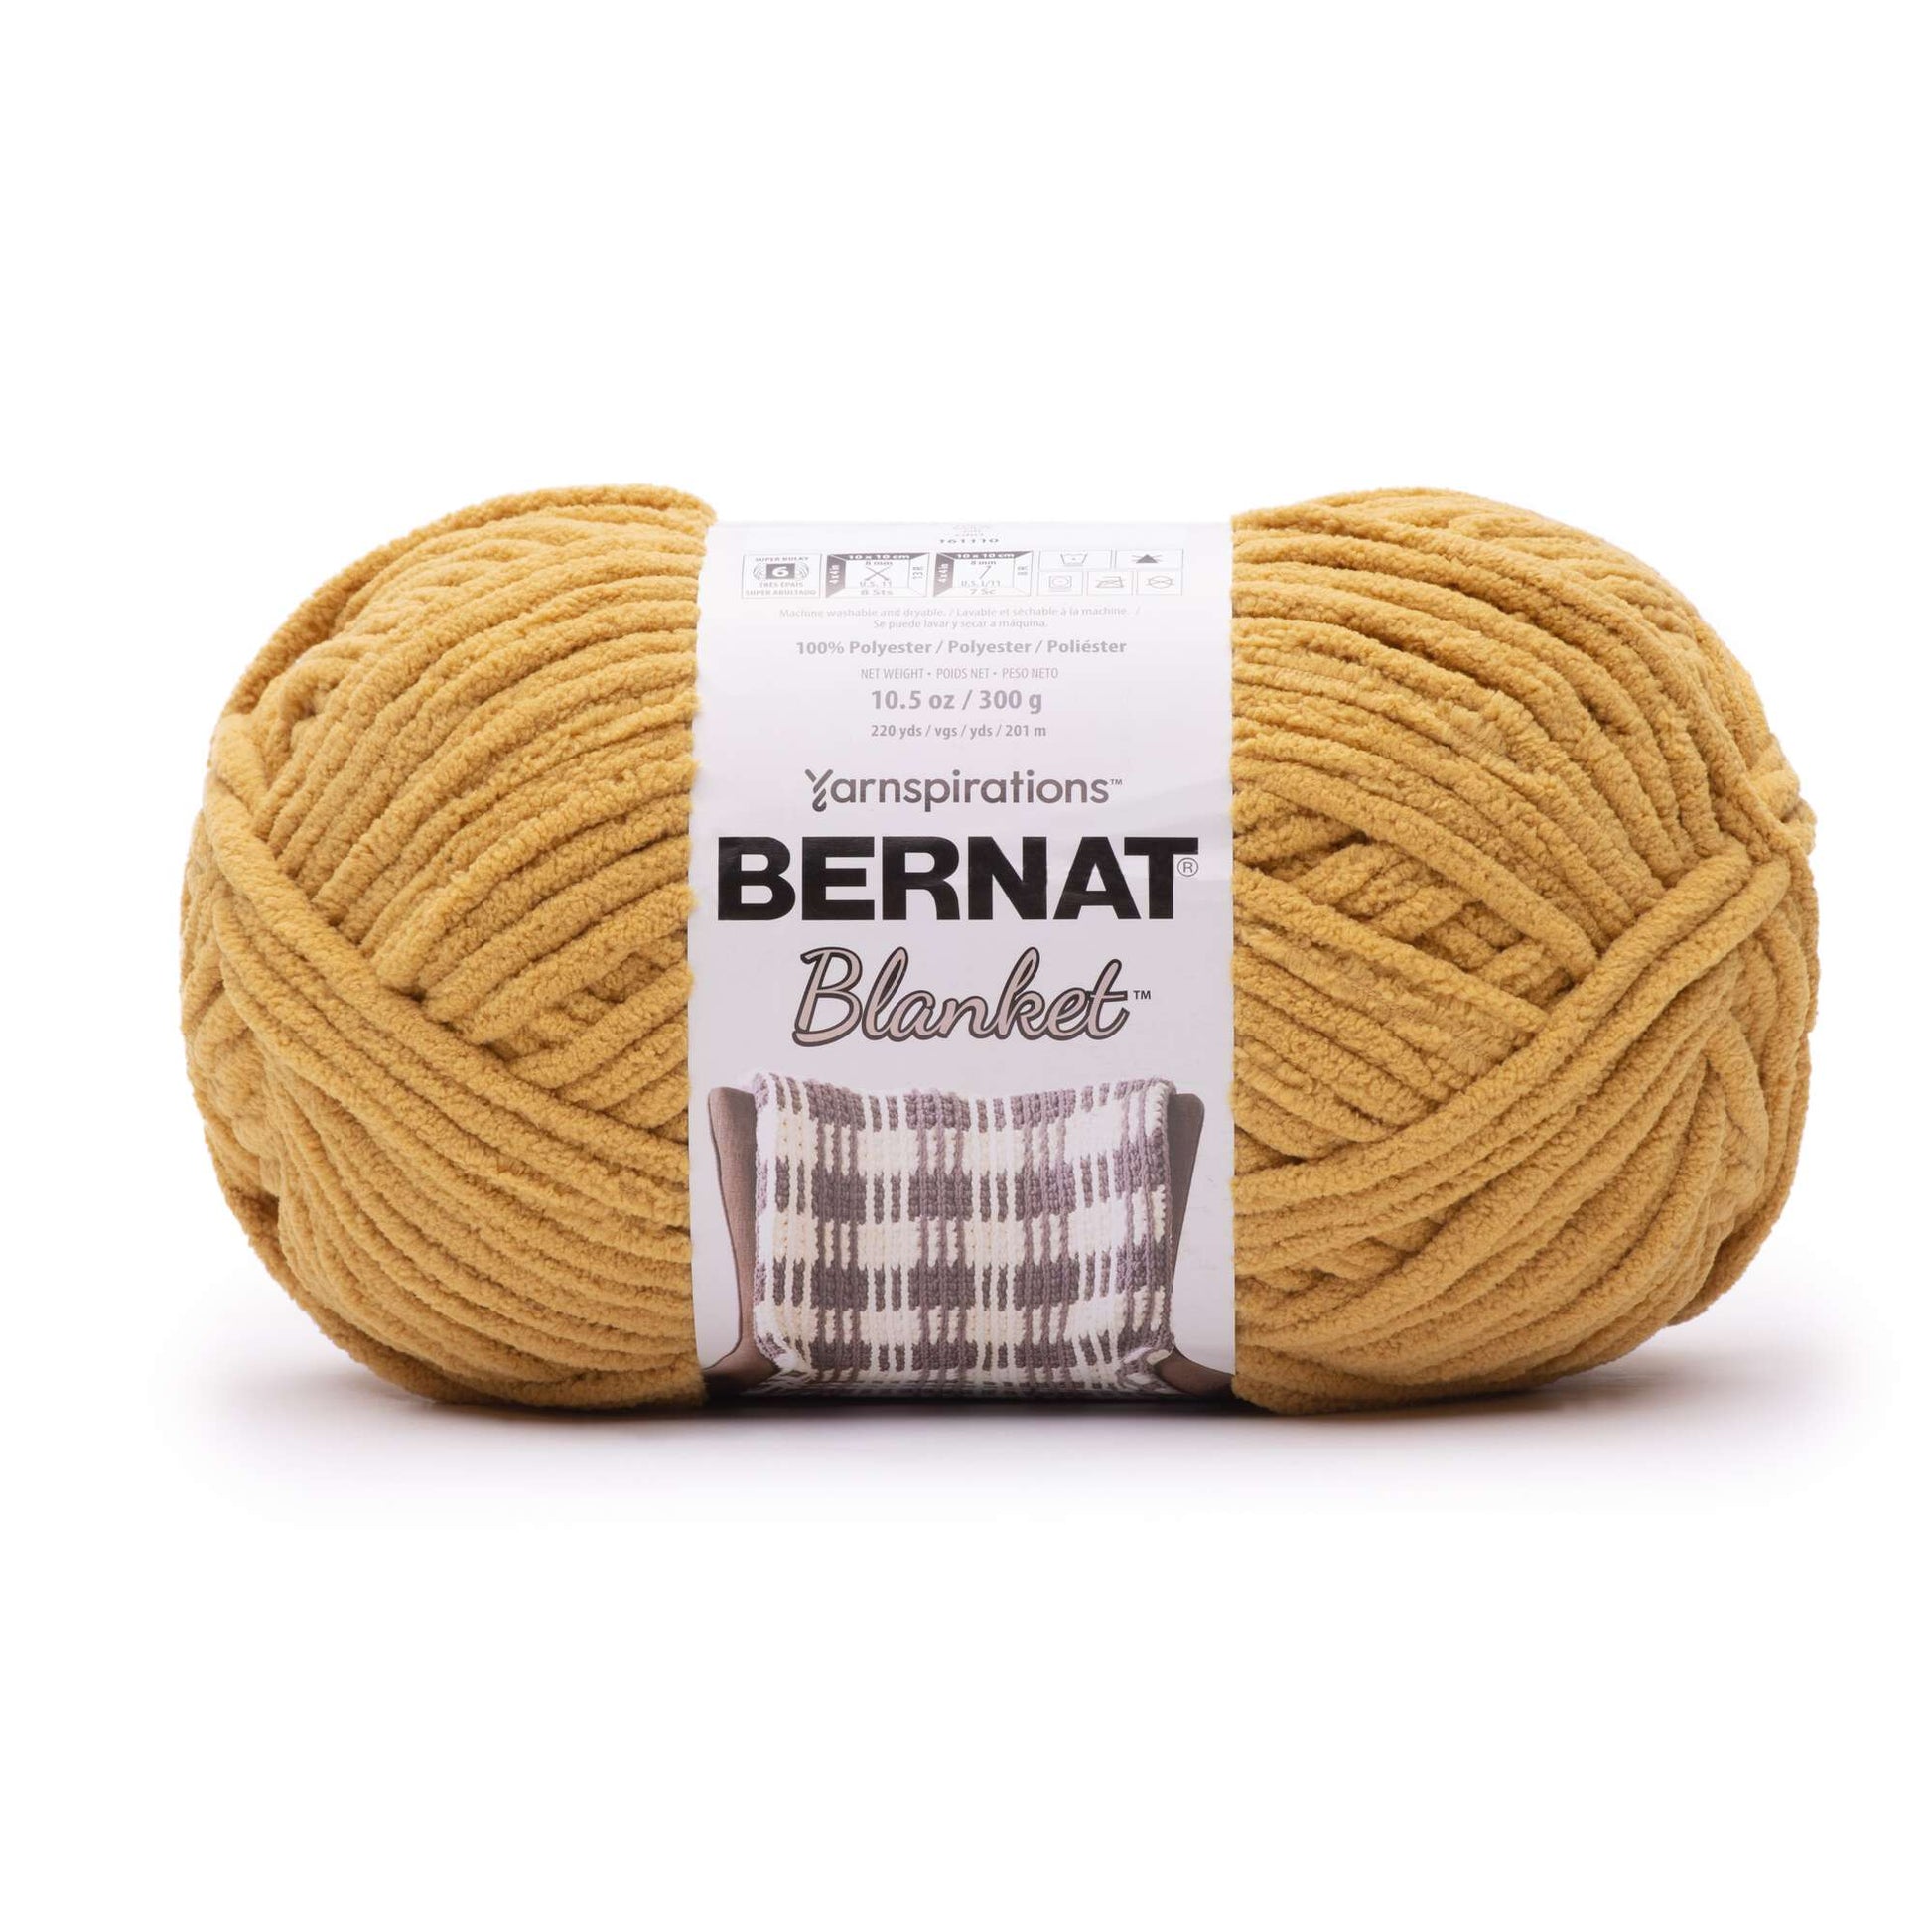 Bernat Blanket Yarn (300g/10.5oz) Gold